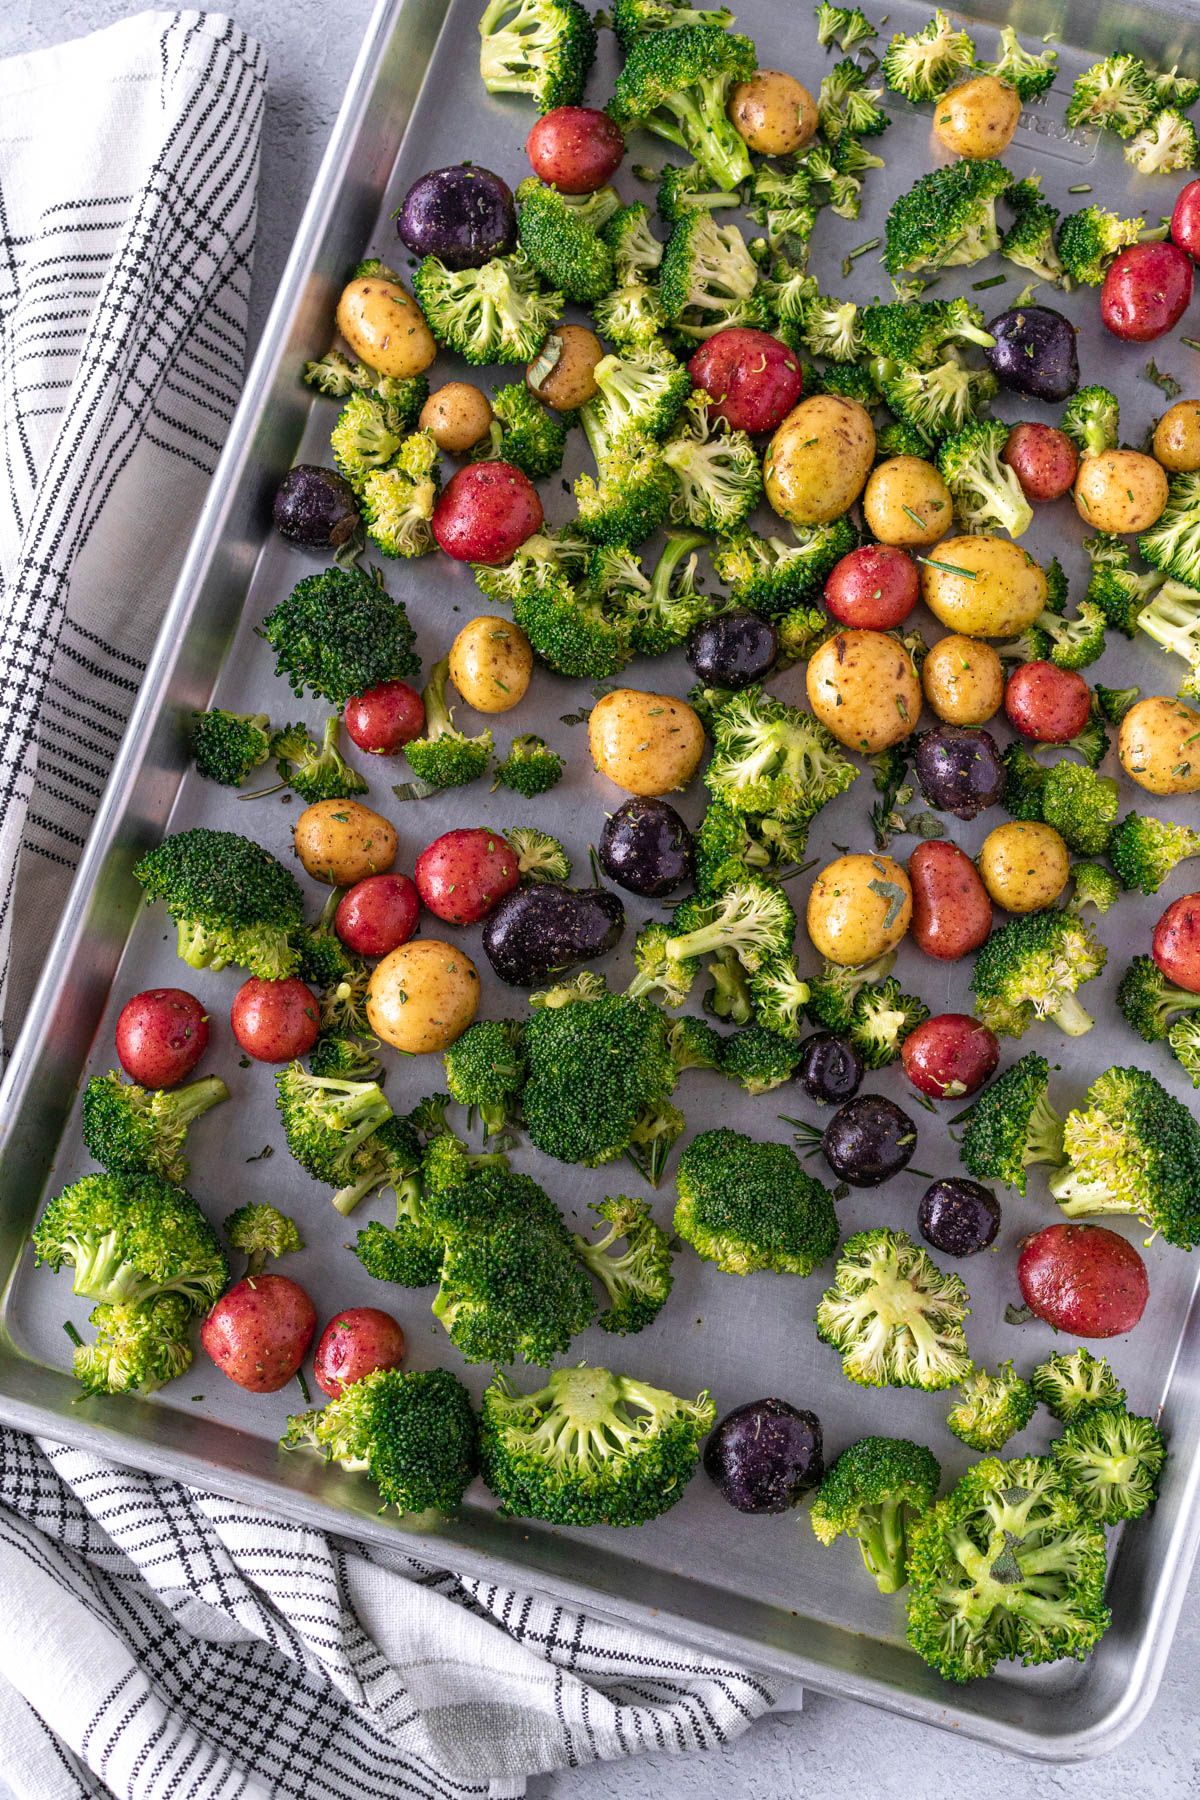 sheet pan with raw broccoli and potatoes